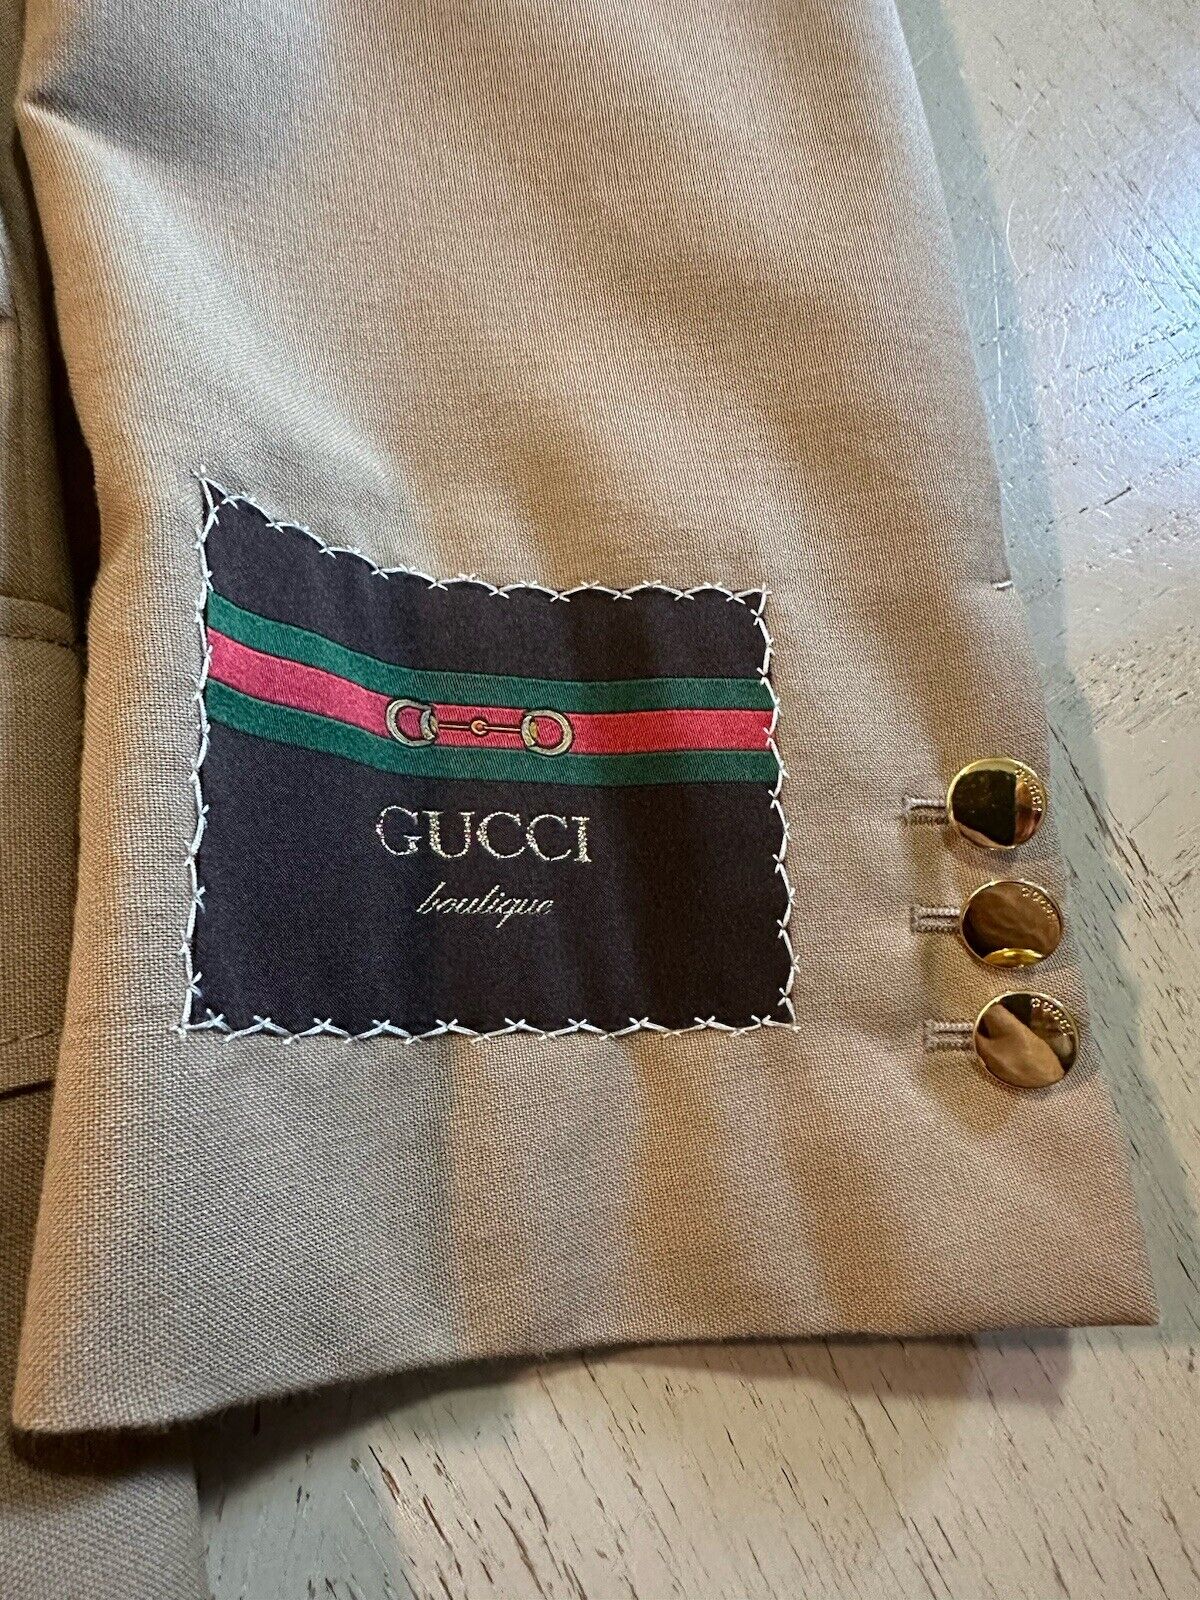 NWT $2200 Gucci Mens Sport Coat Blazer Beige 38R US/48R Eu Italy